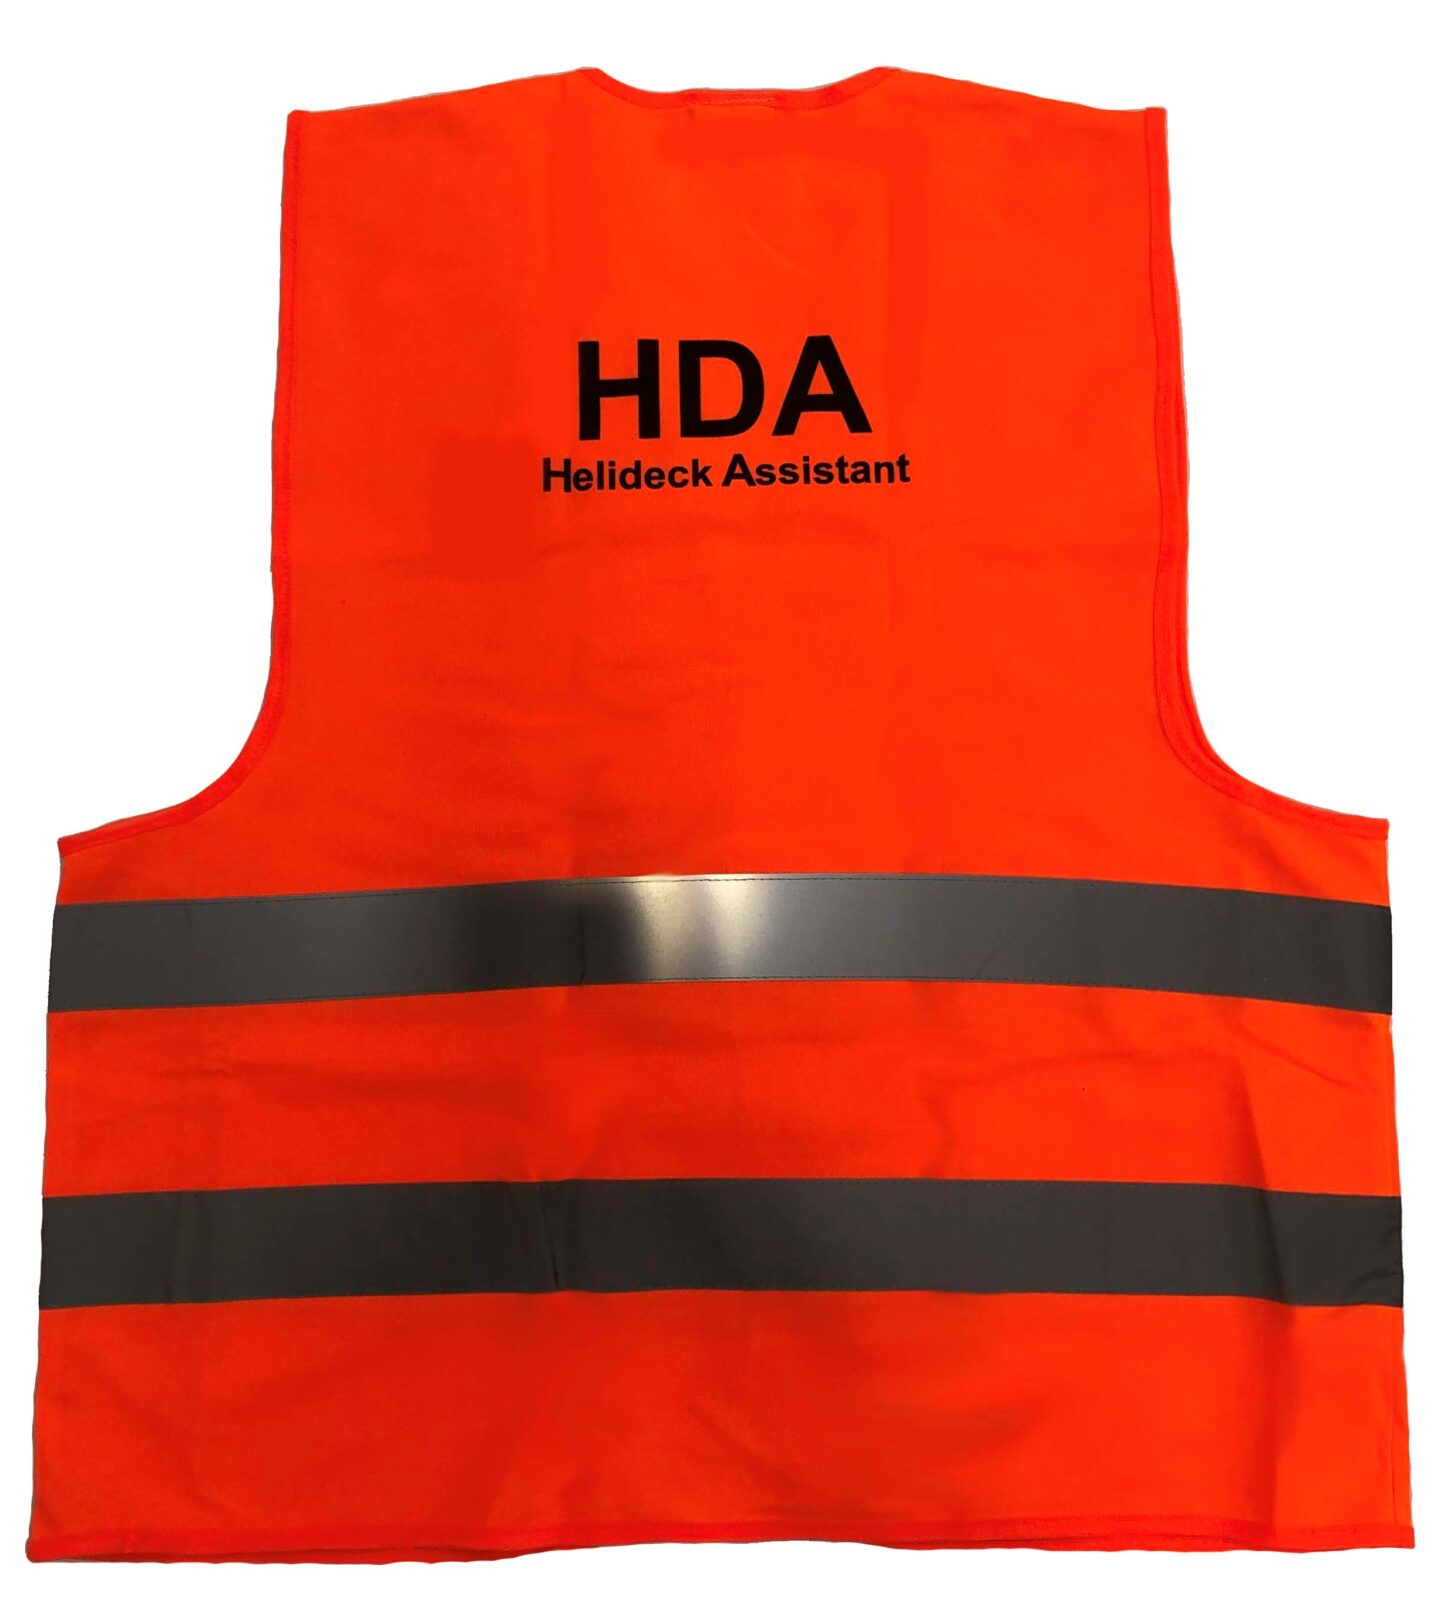 HDA Safety Vest purchase? - Holland Aviation